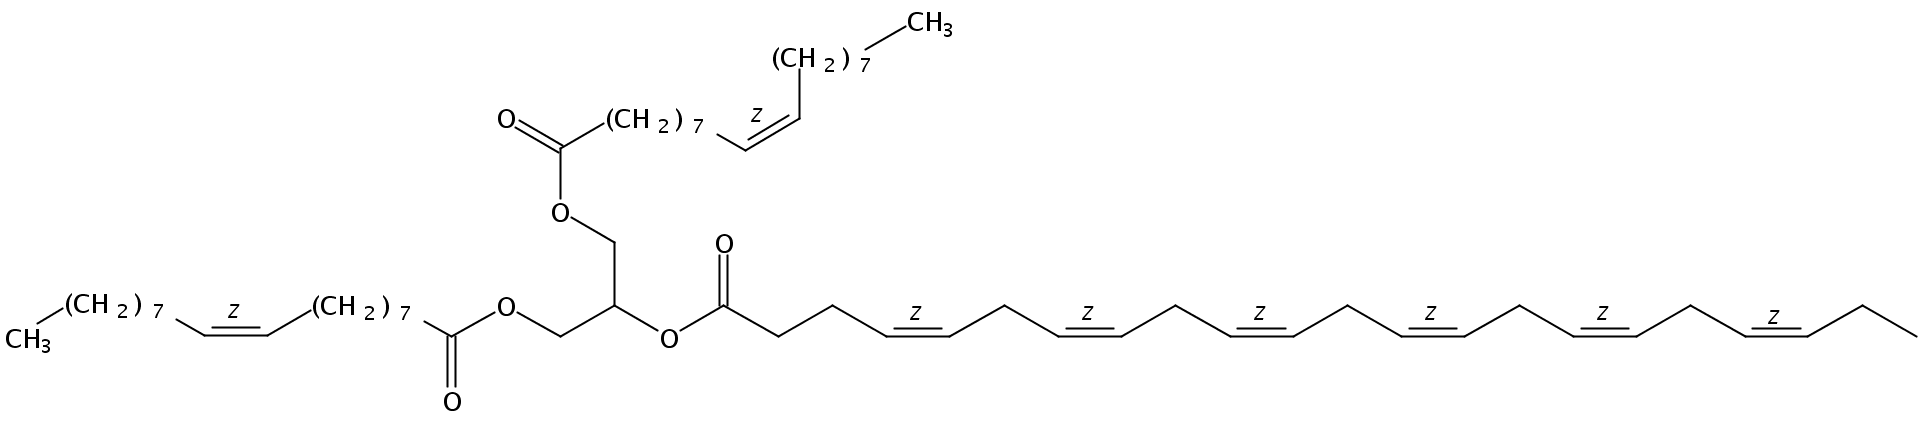 Structural formula of 1,3-Olein-2-Docosahexaenoin